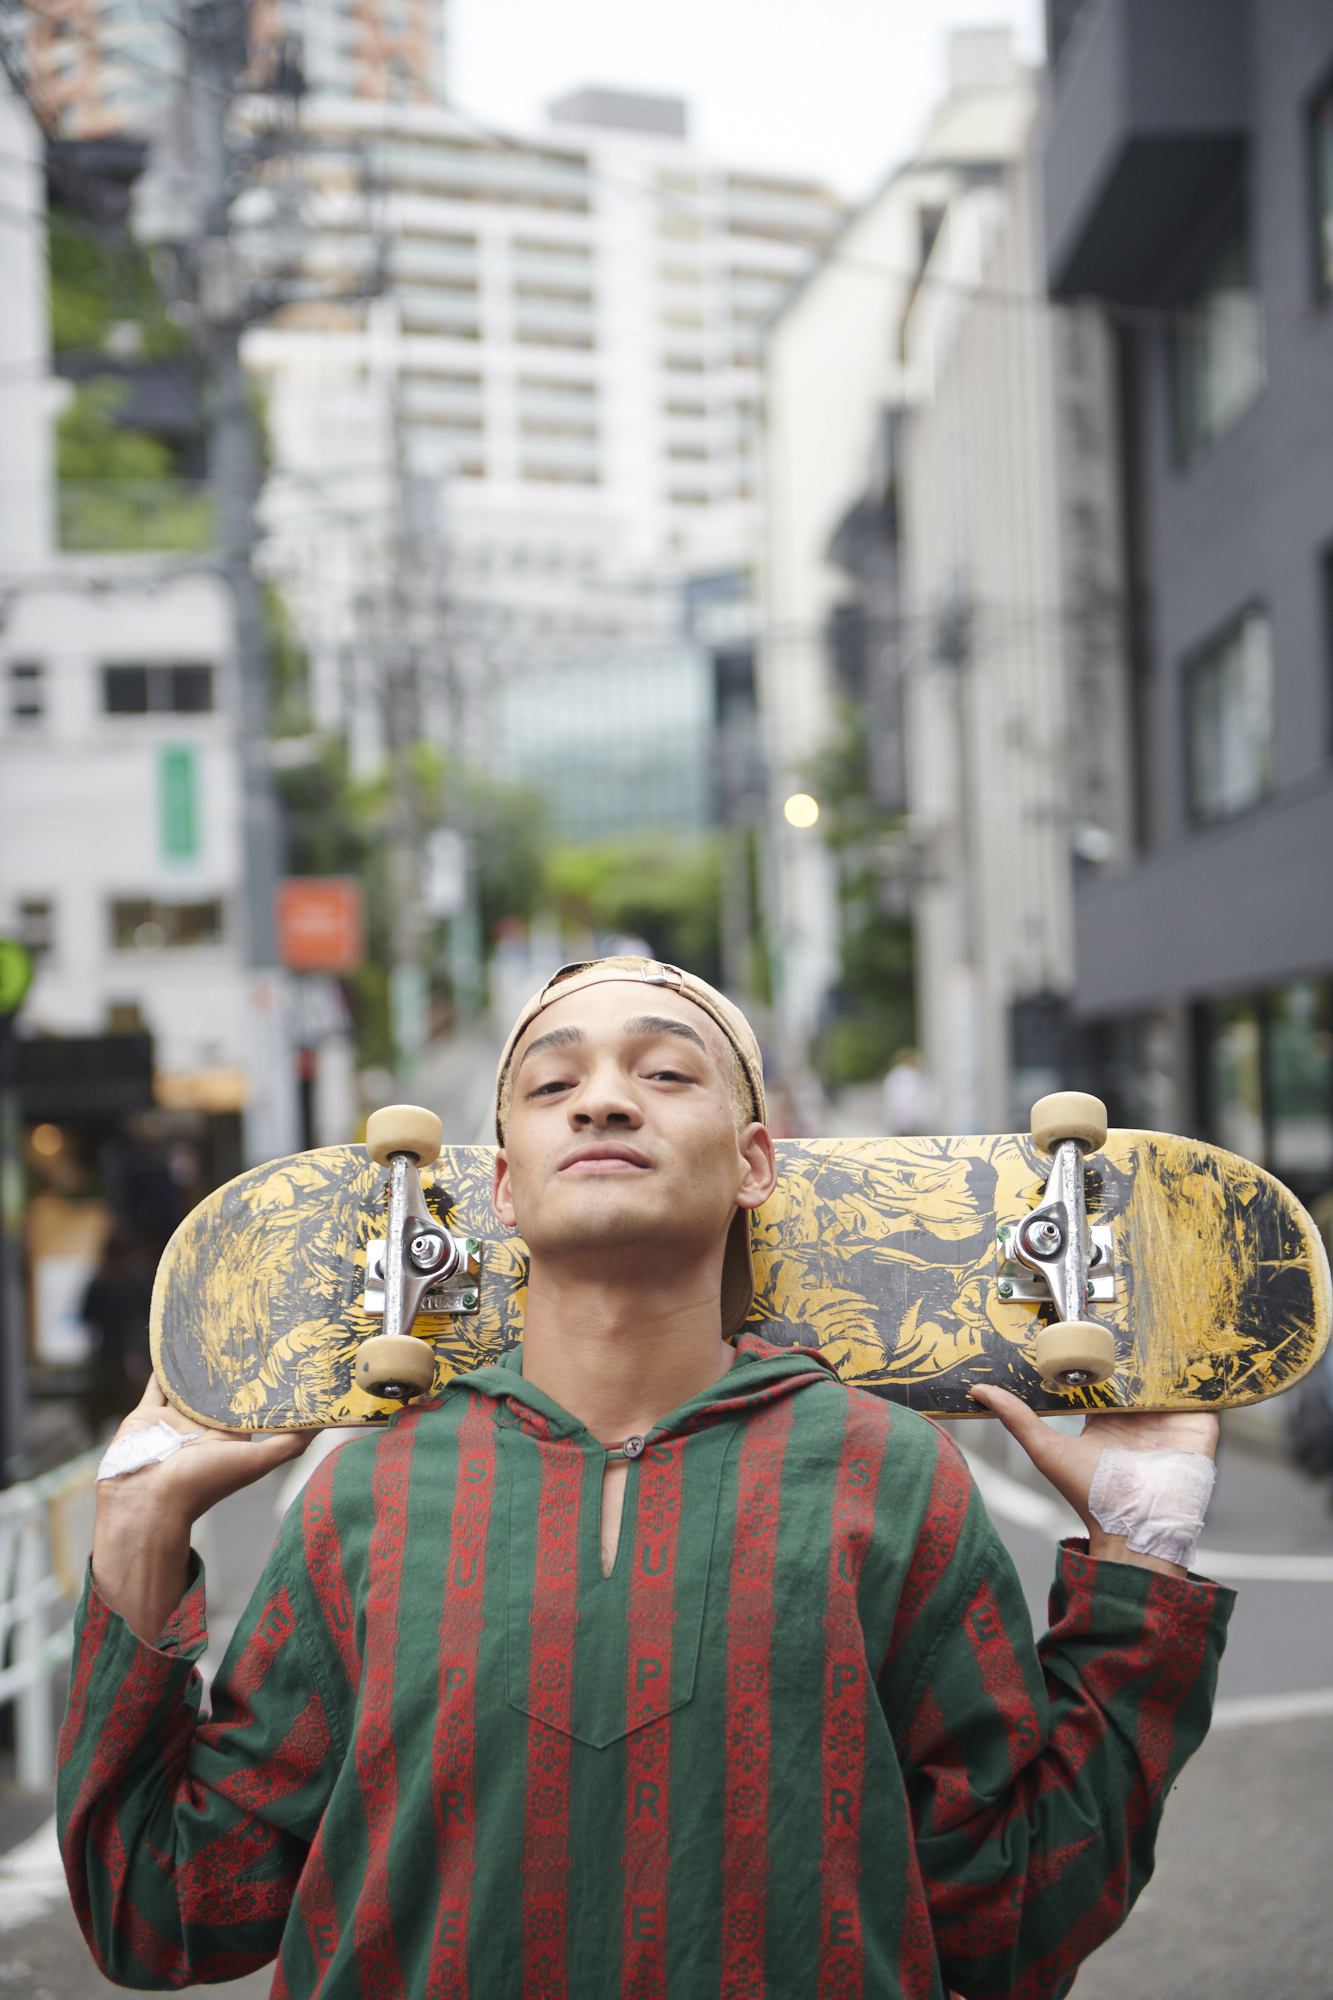 Joshua Nishimiya, the Skater Heralding the Future of Skateboarding